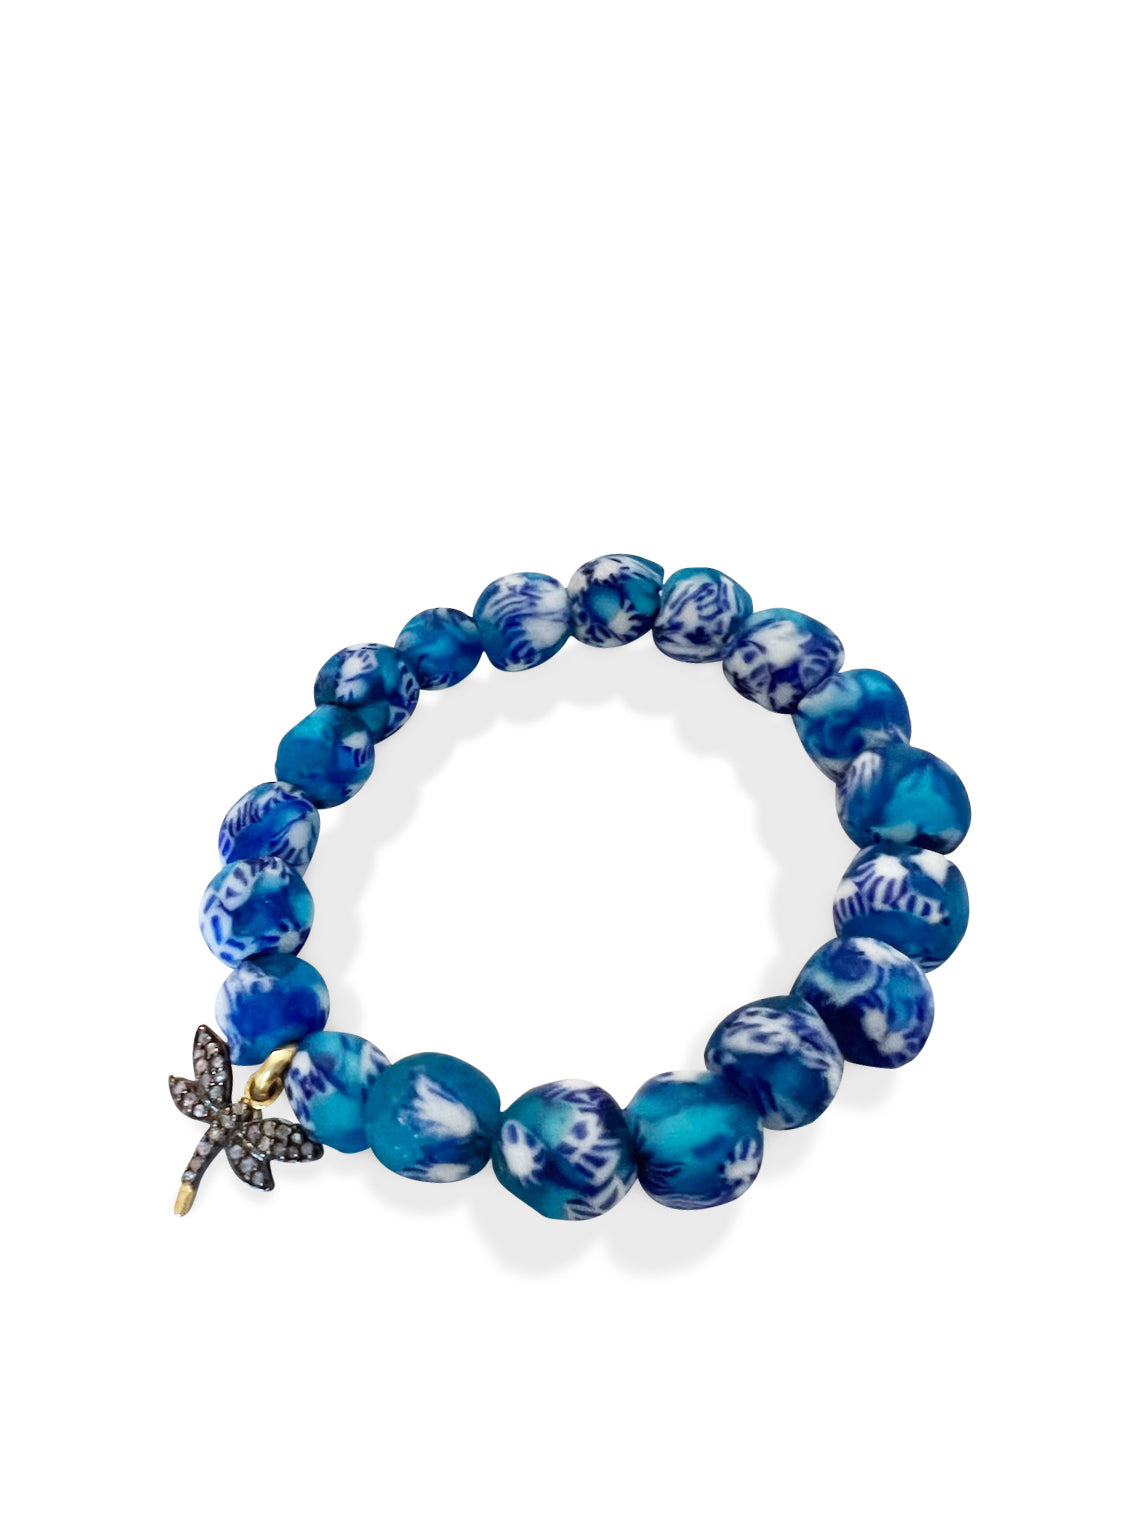 Blue Krobo Beads with Pave Diamond Dragonfly